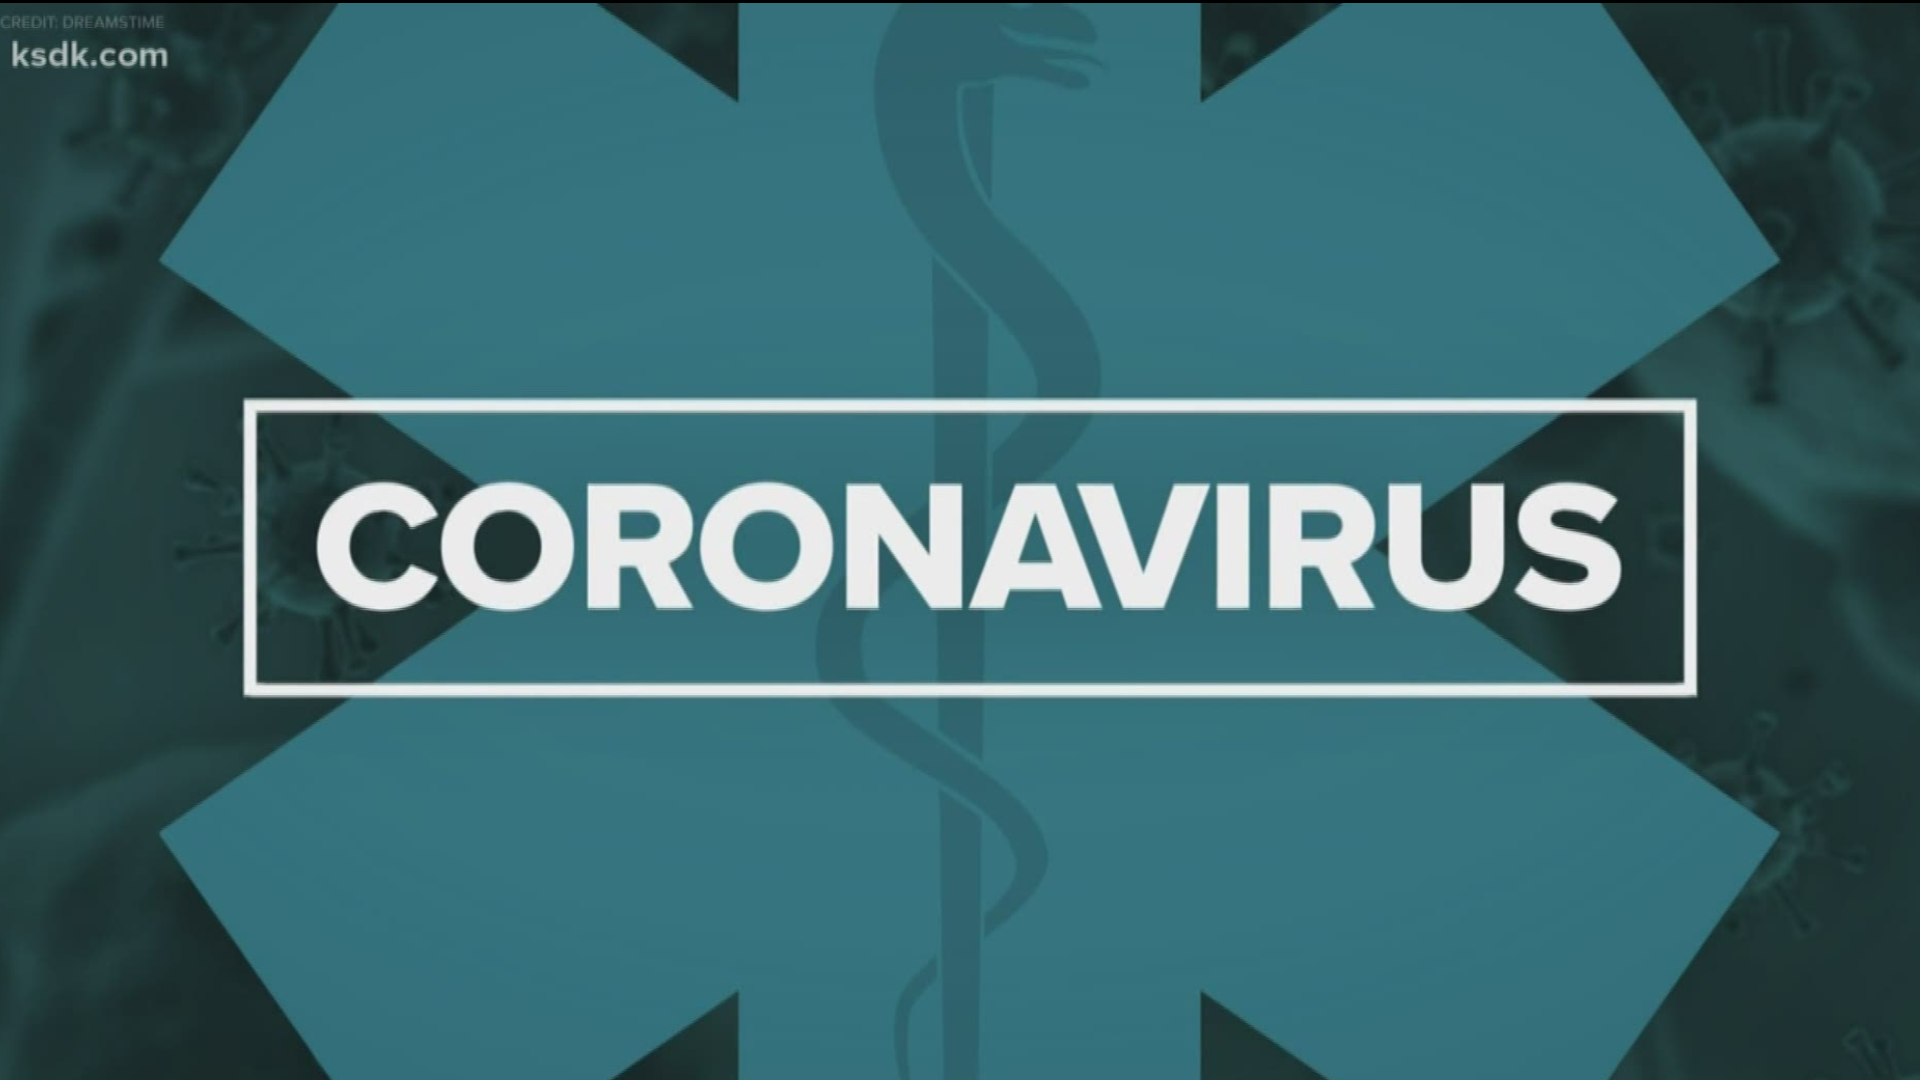 The latest update on the coronavirus impact in the St. Louis metro area